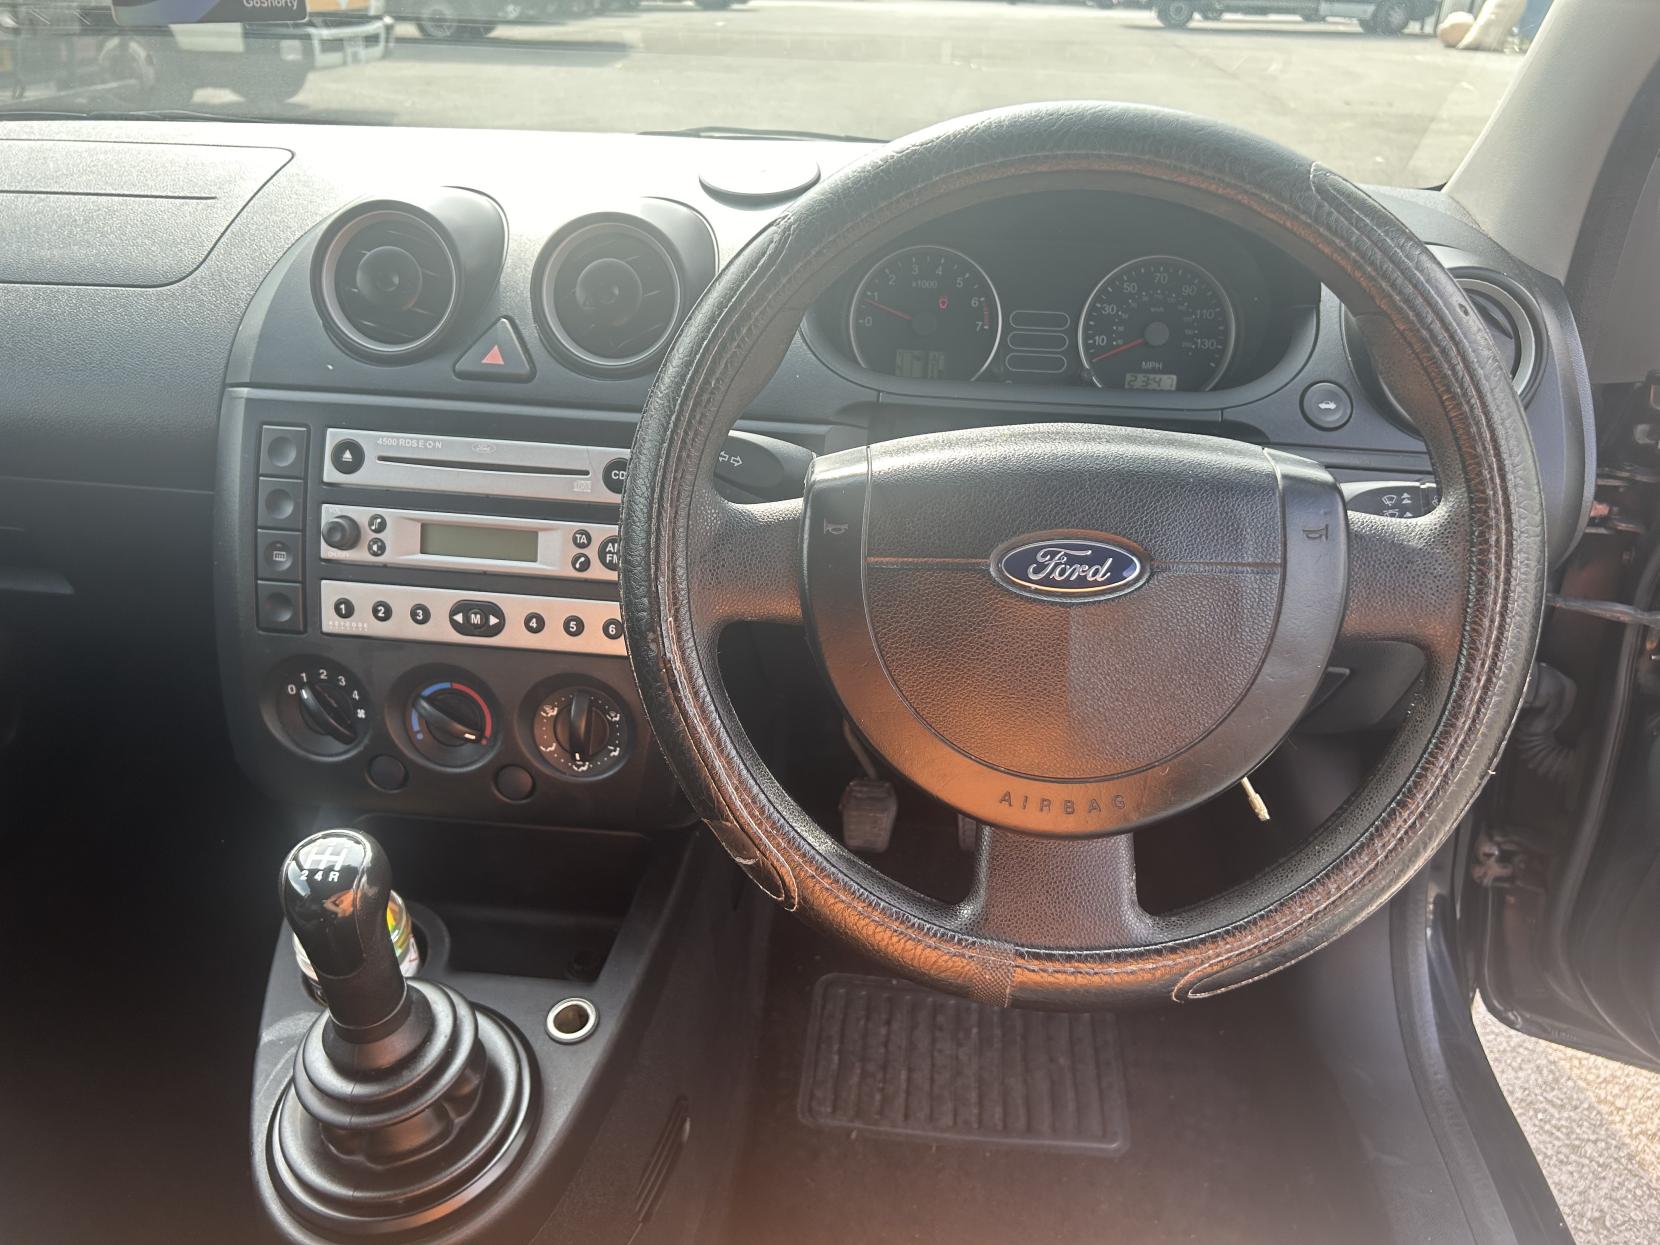 Ford Fiesta 1.4 Zetec Hatchback 3dr Petrol Manual (158 g/km, 79 bhp)